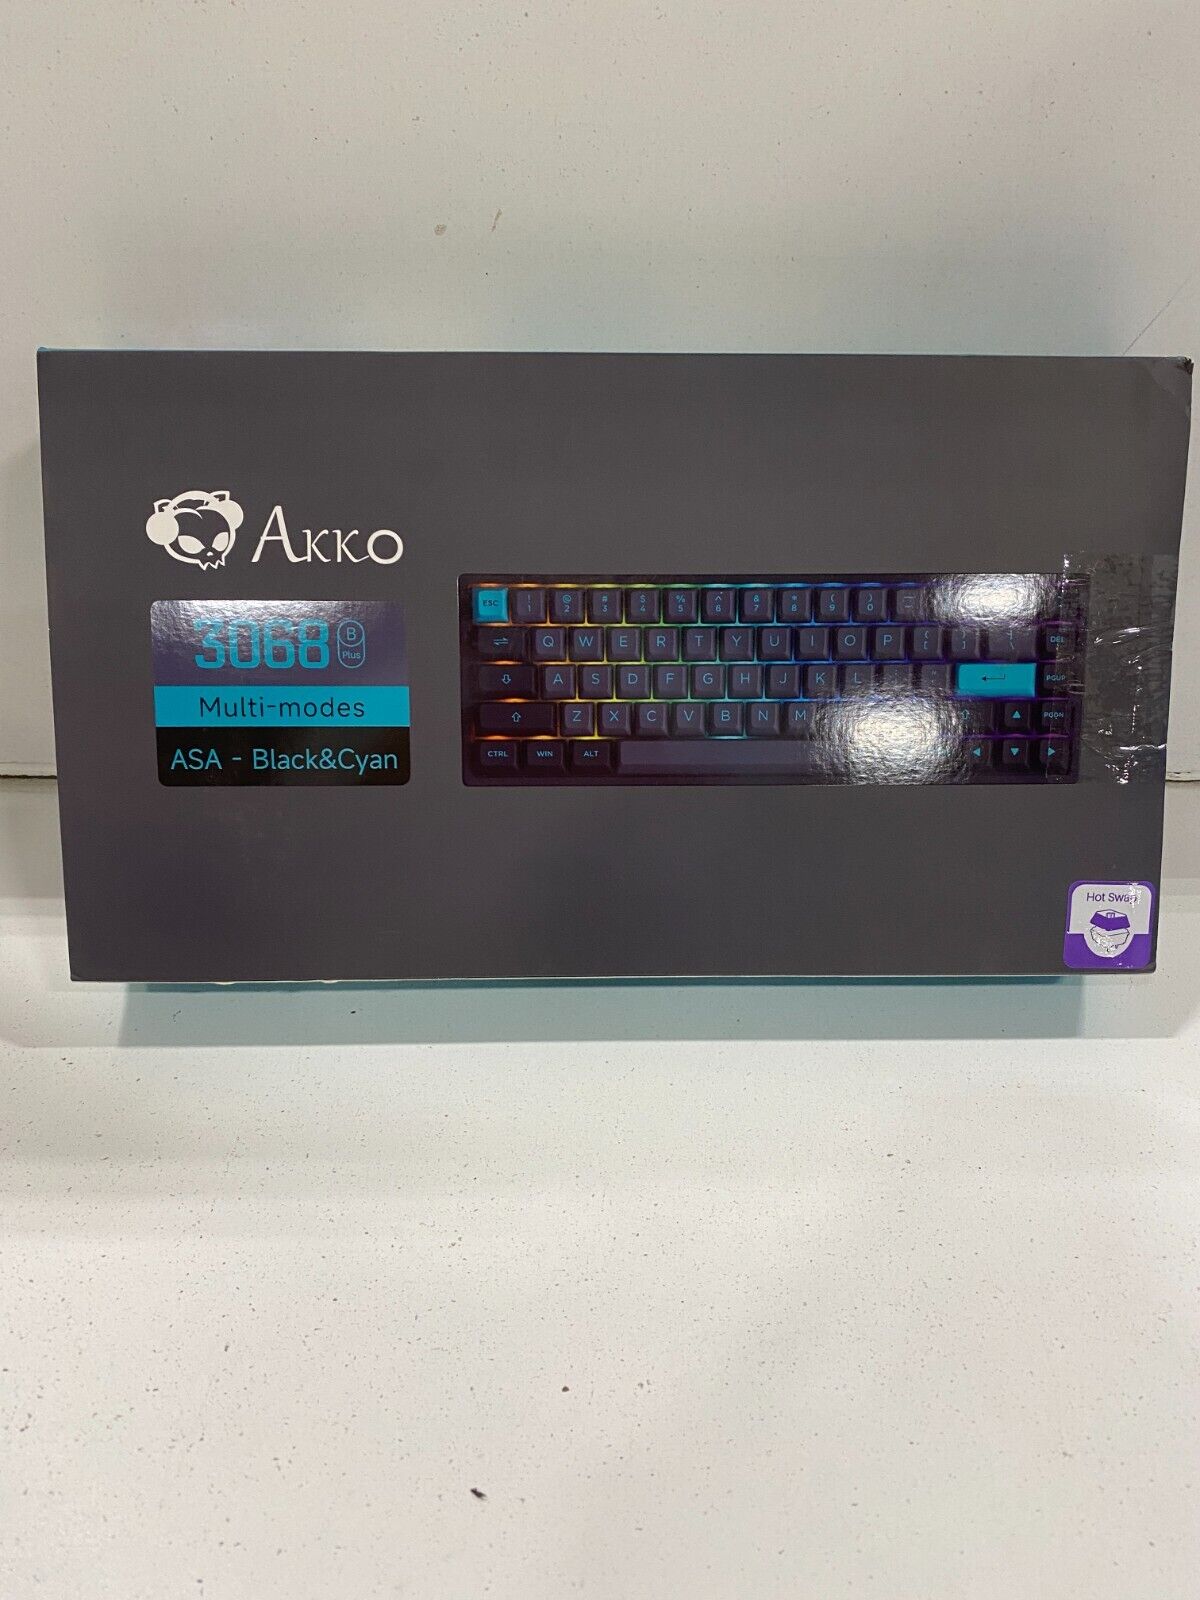 Akko Keyboard 3068 B Plus - Multi-modes